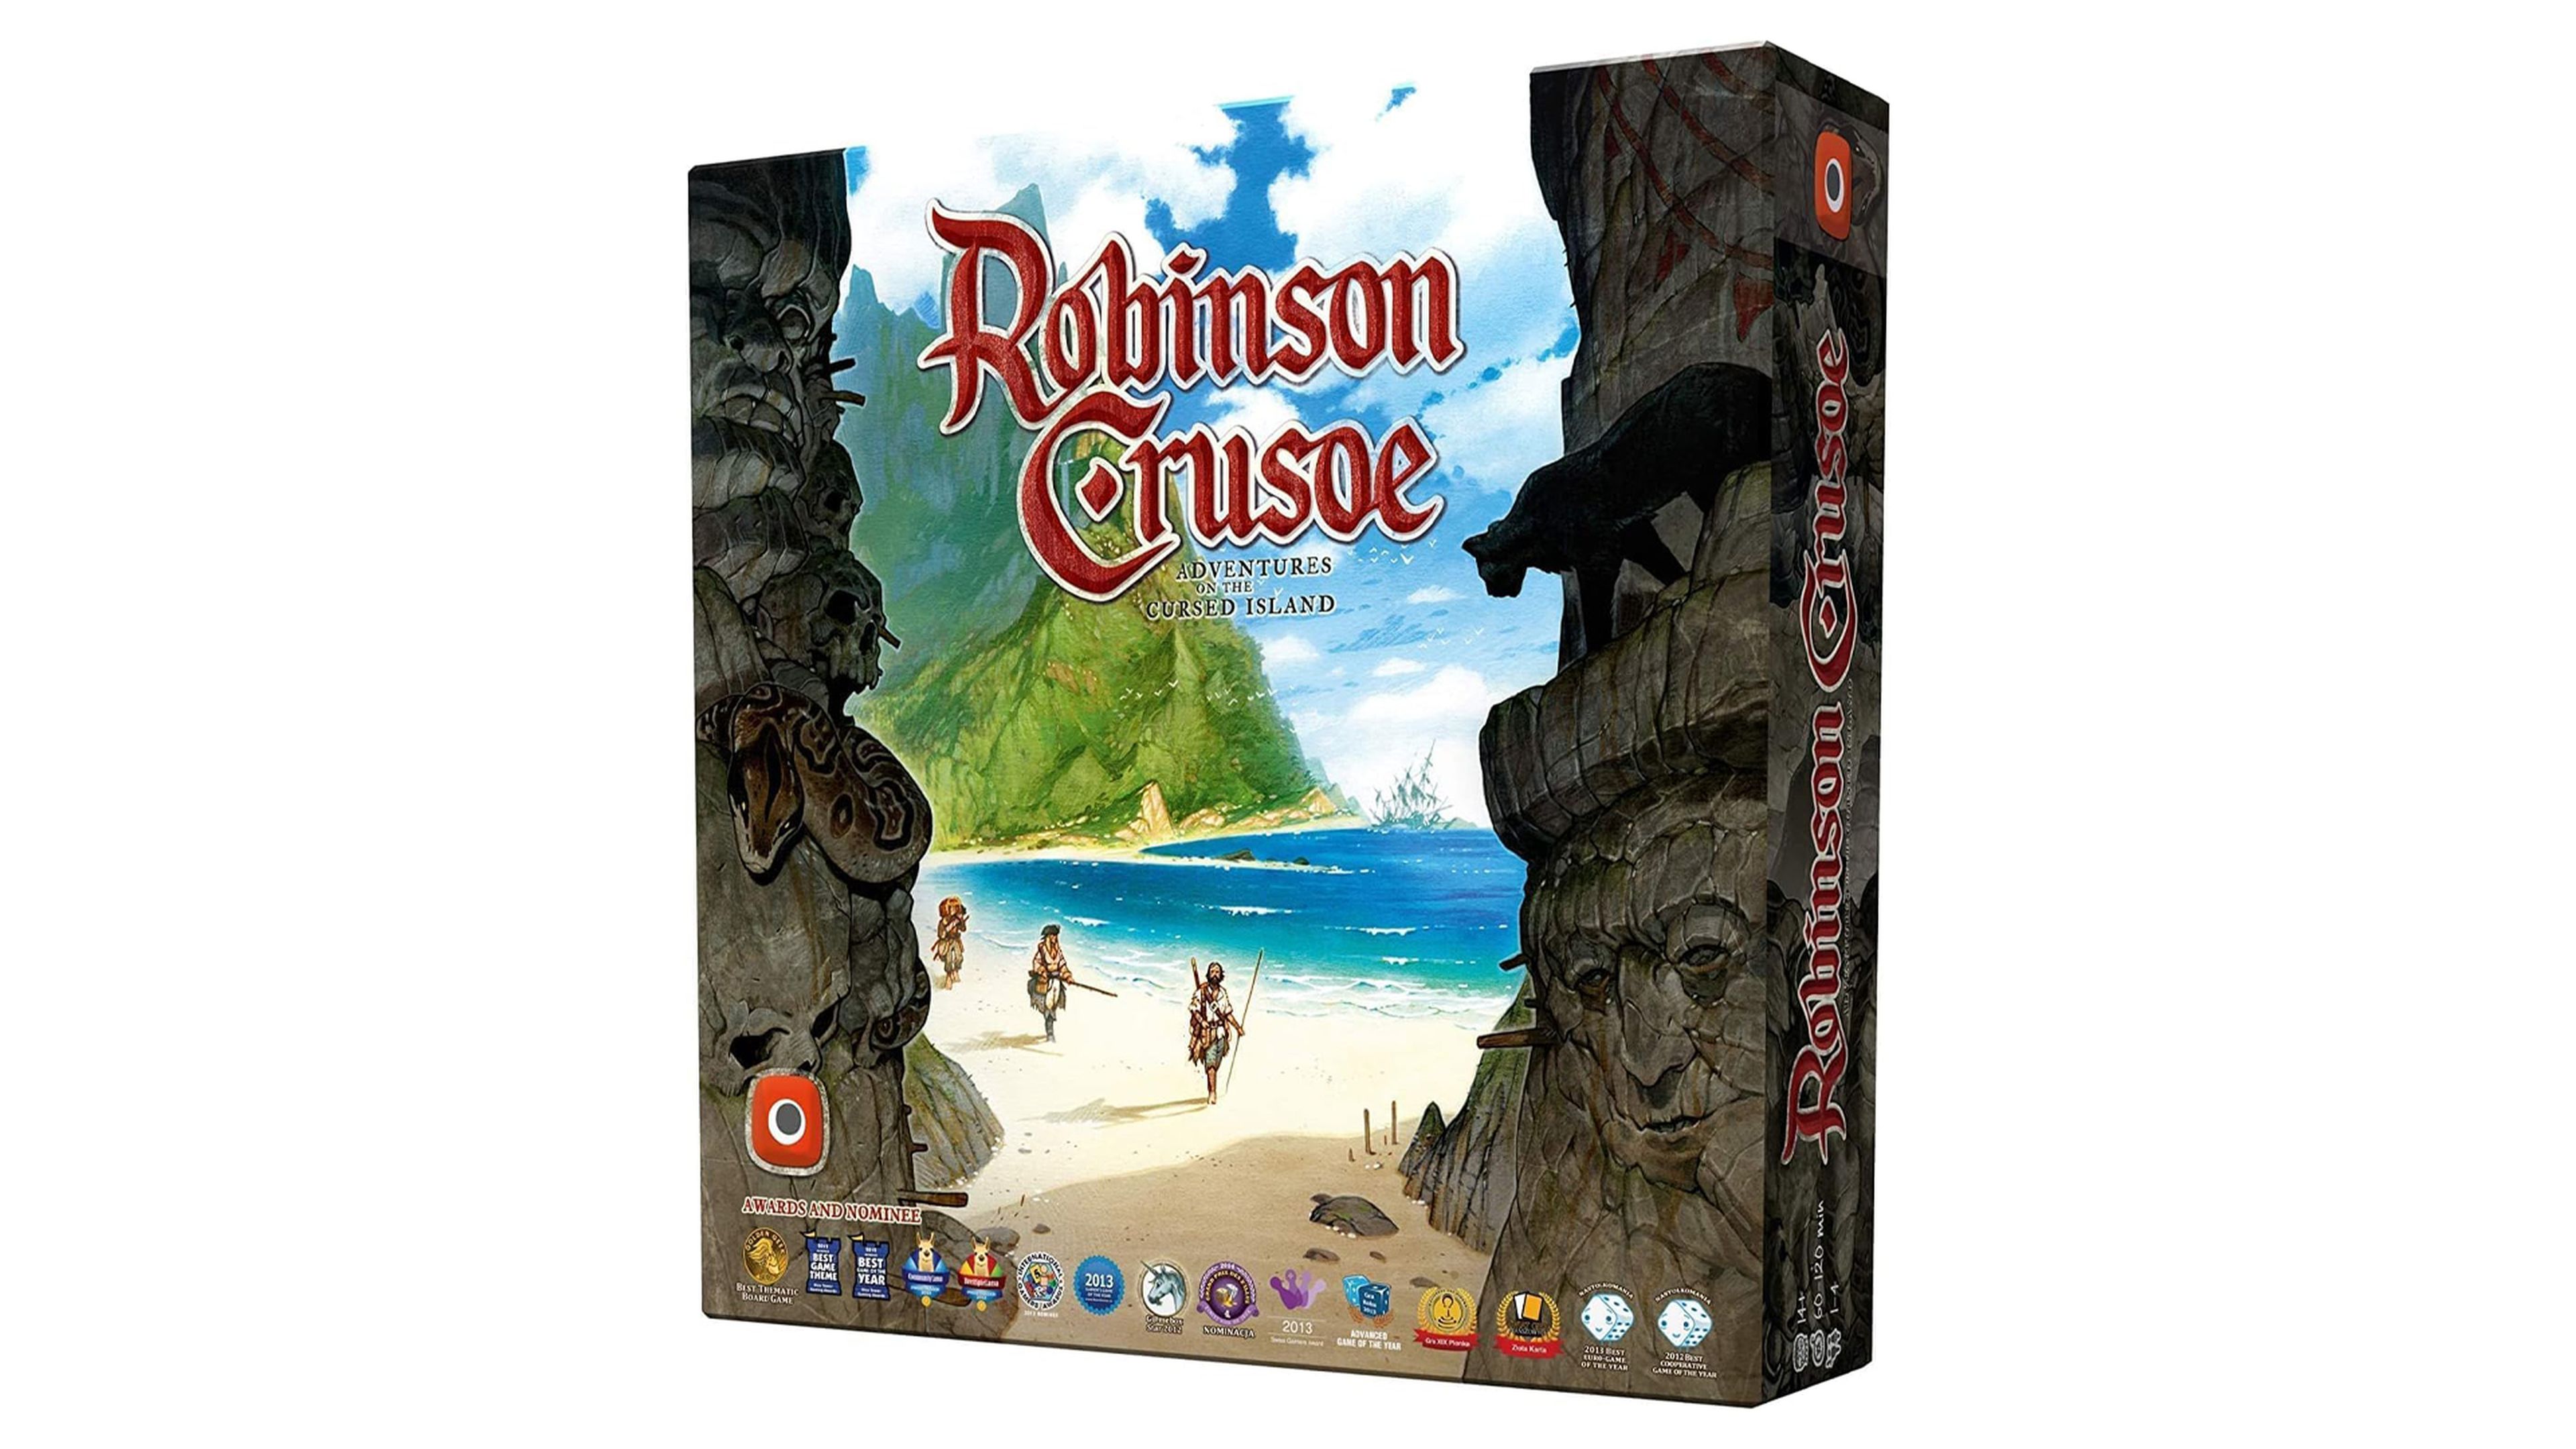 Robinson Crusoe: Adventures on The Cursed Island